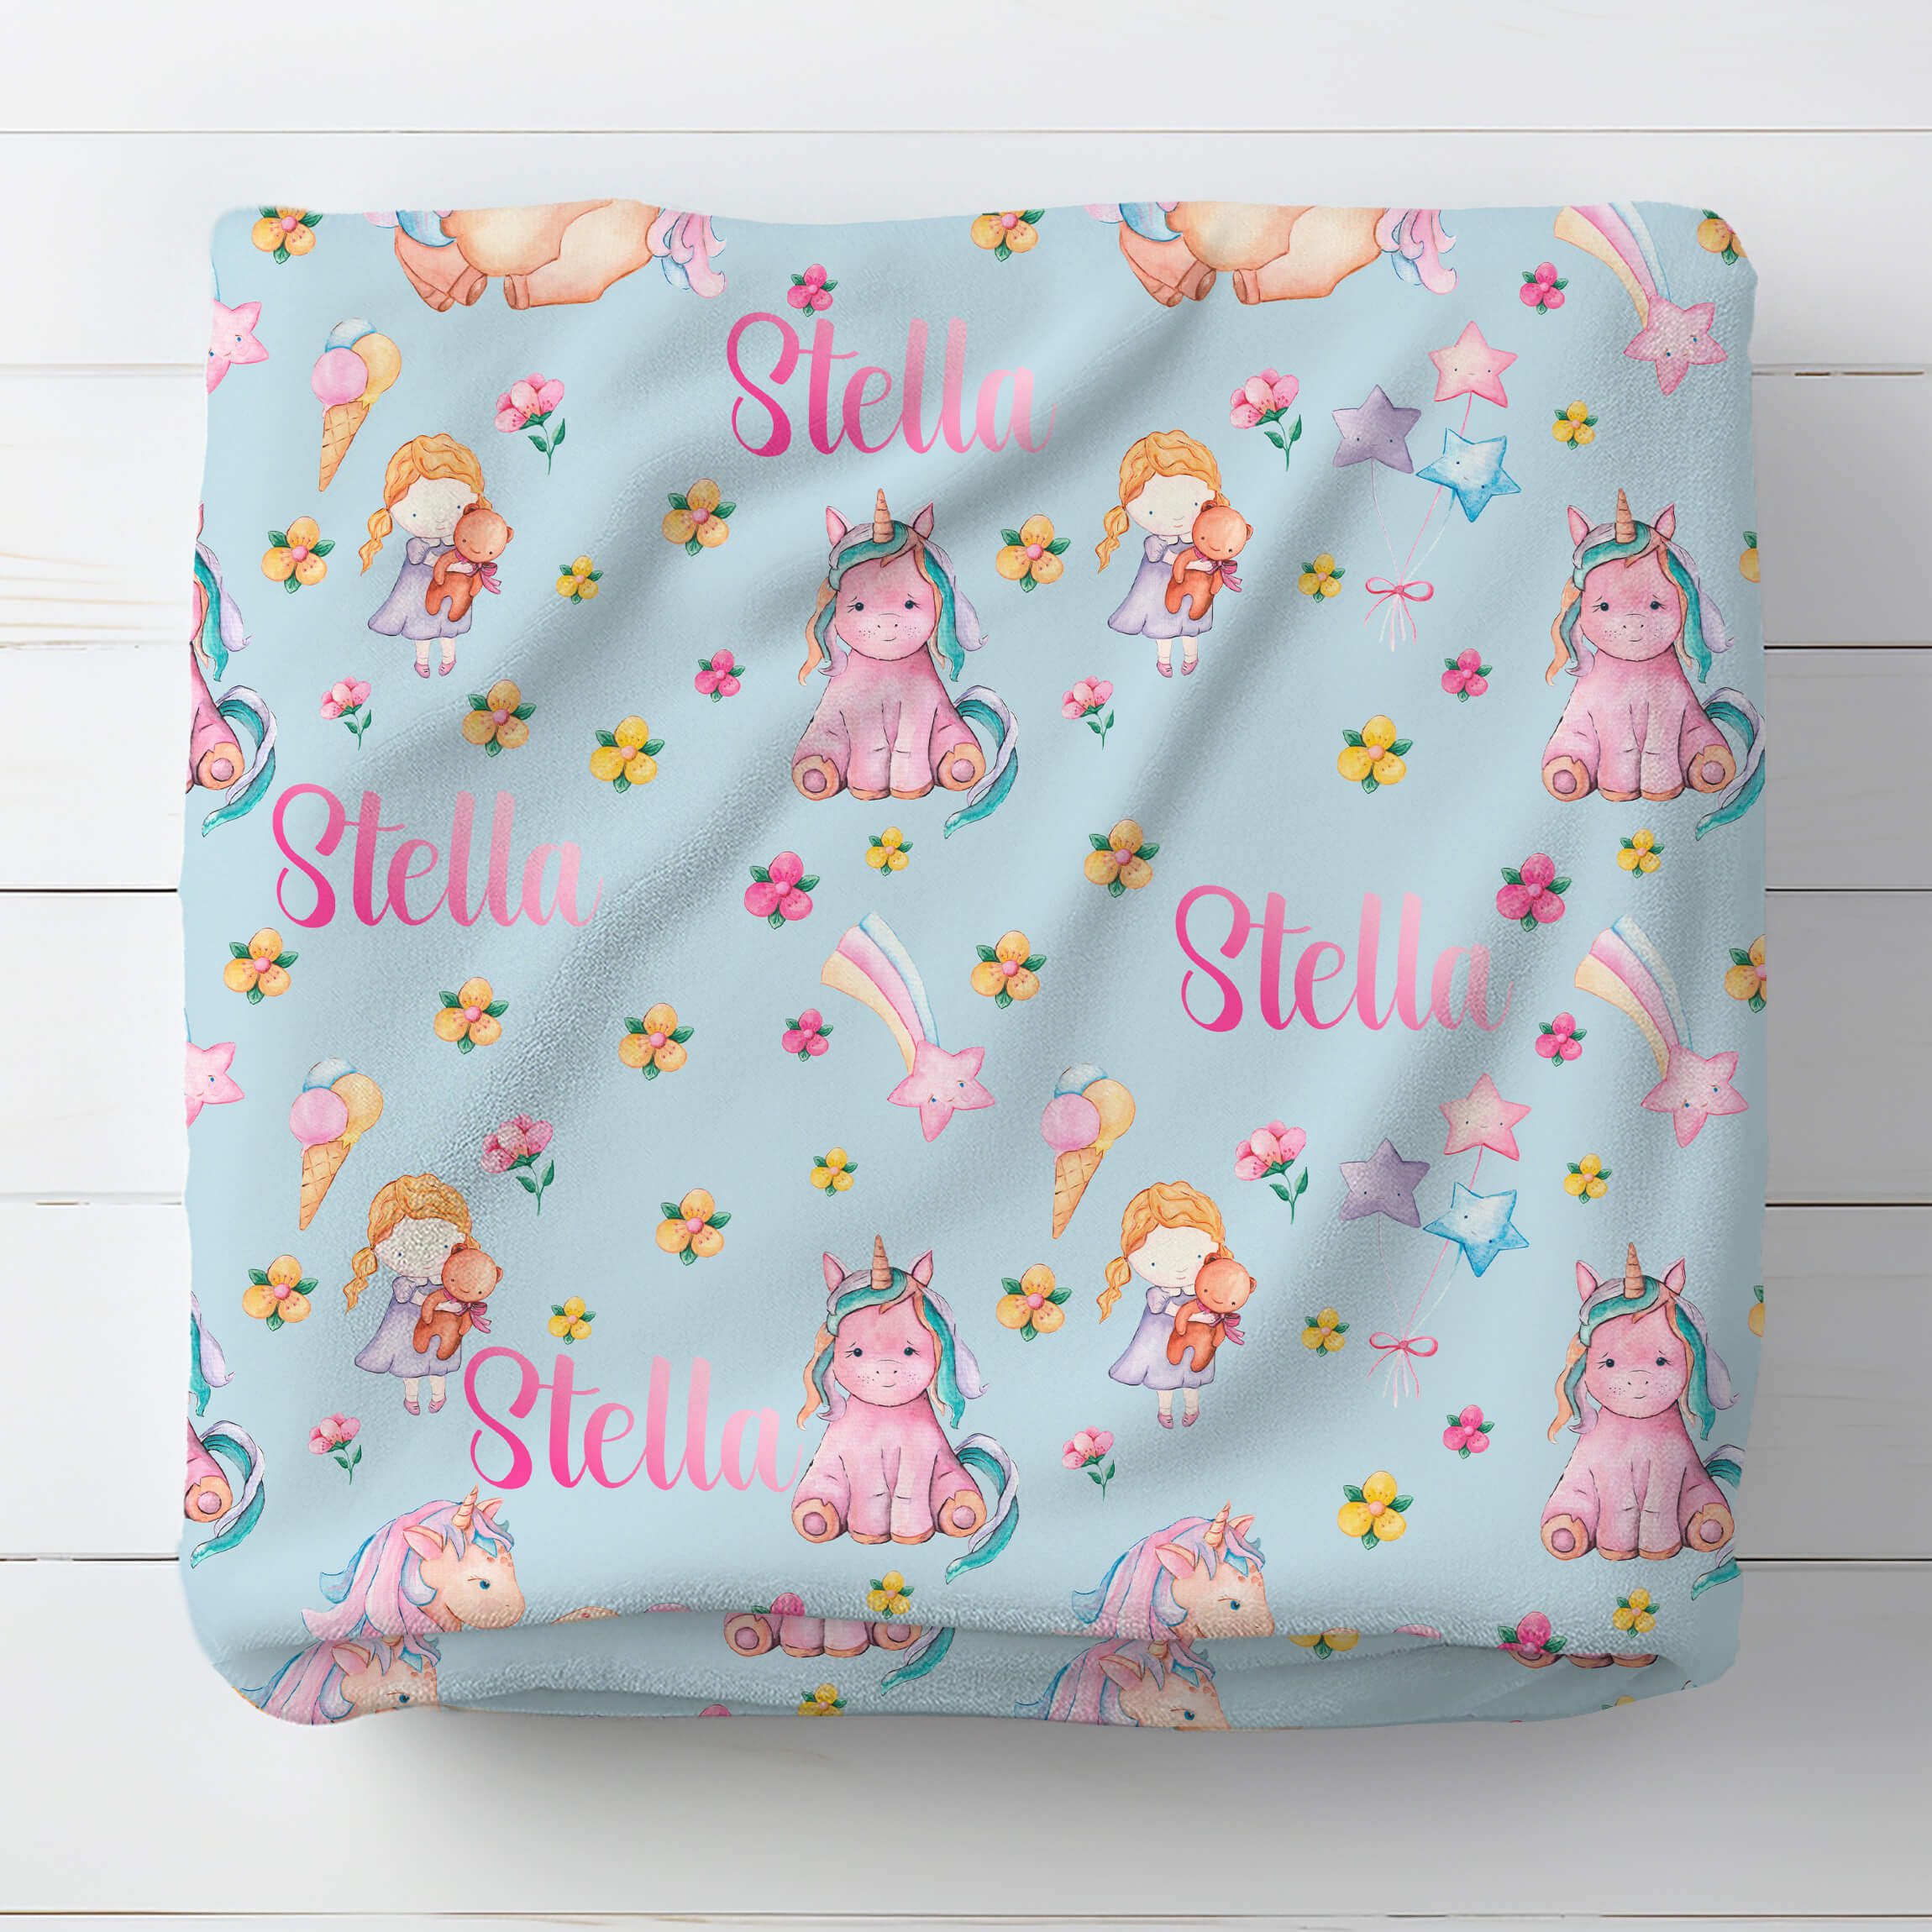 Personalized Name Blanket - Little Unicorn